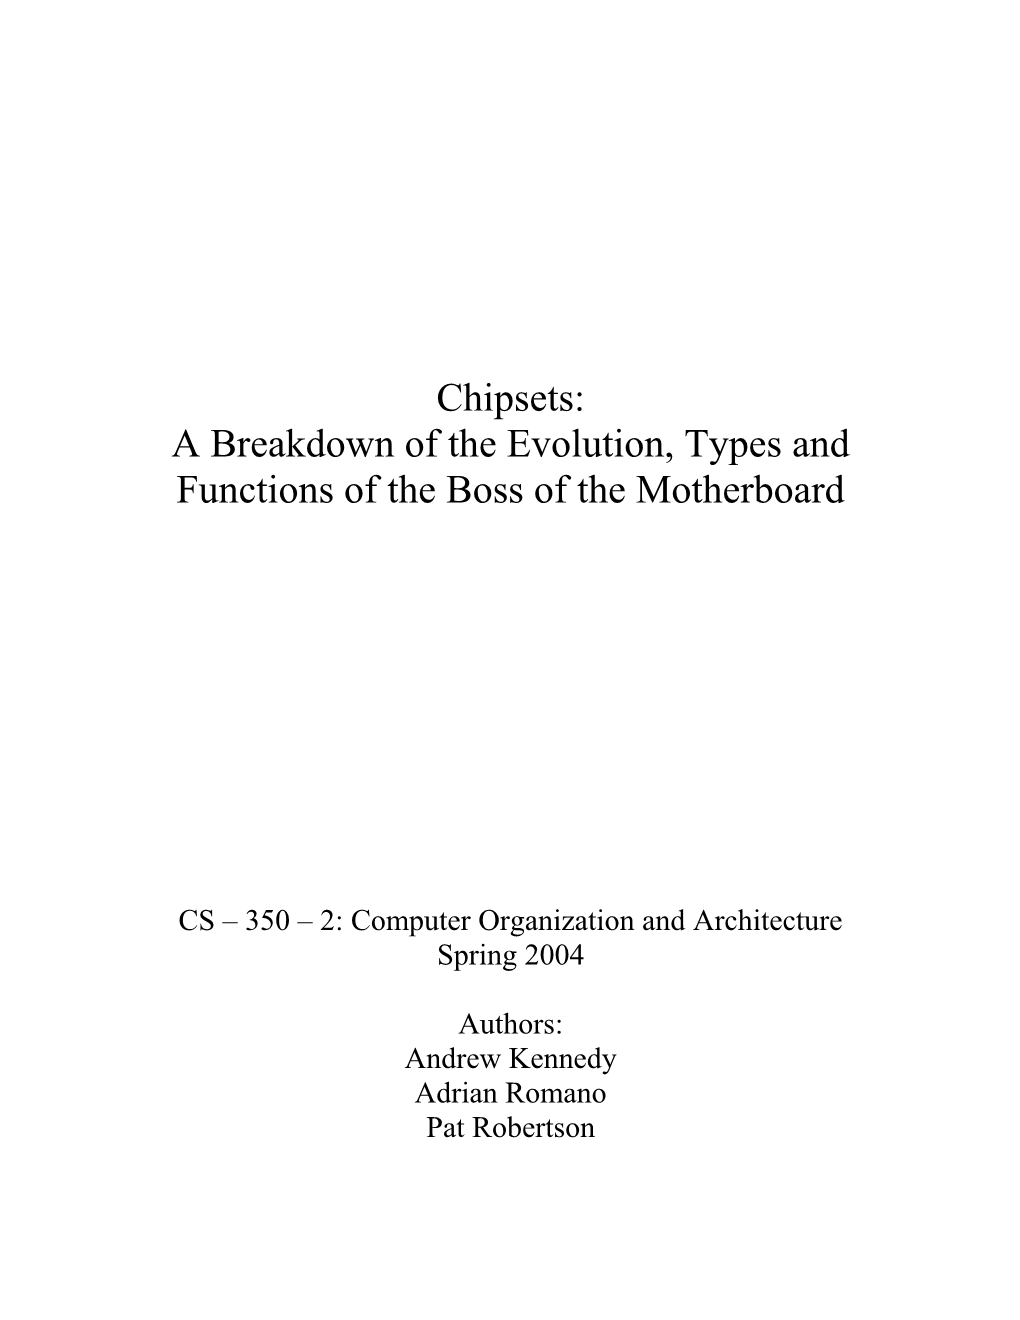 CS 350 2: Computer Organization and Architecture